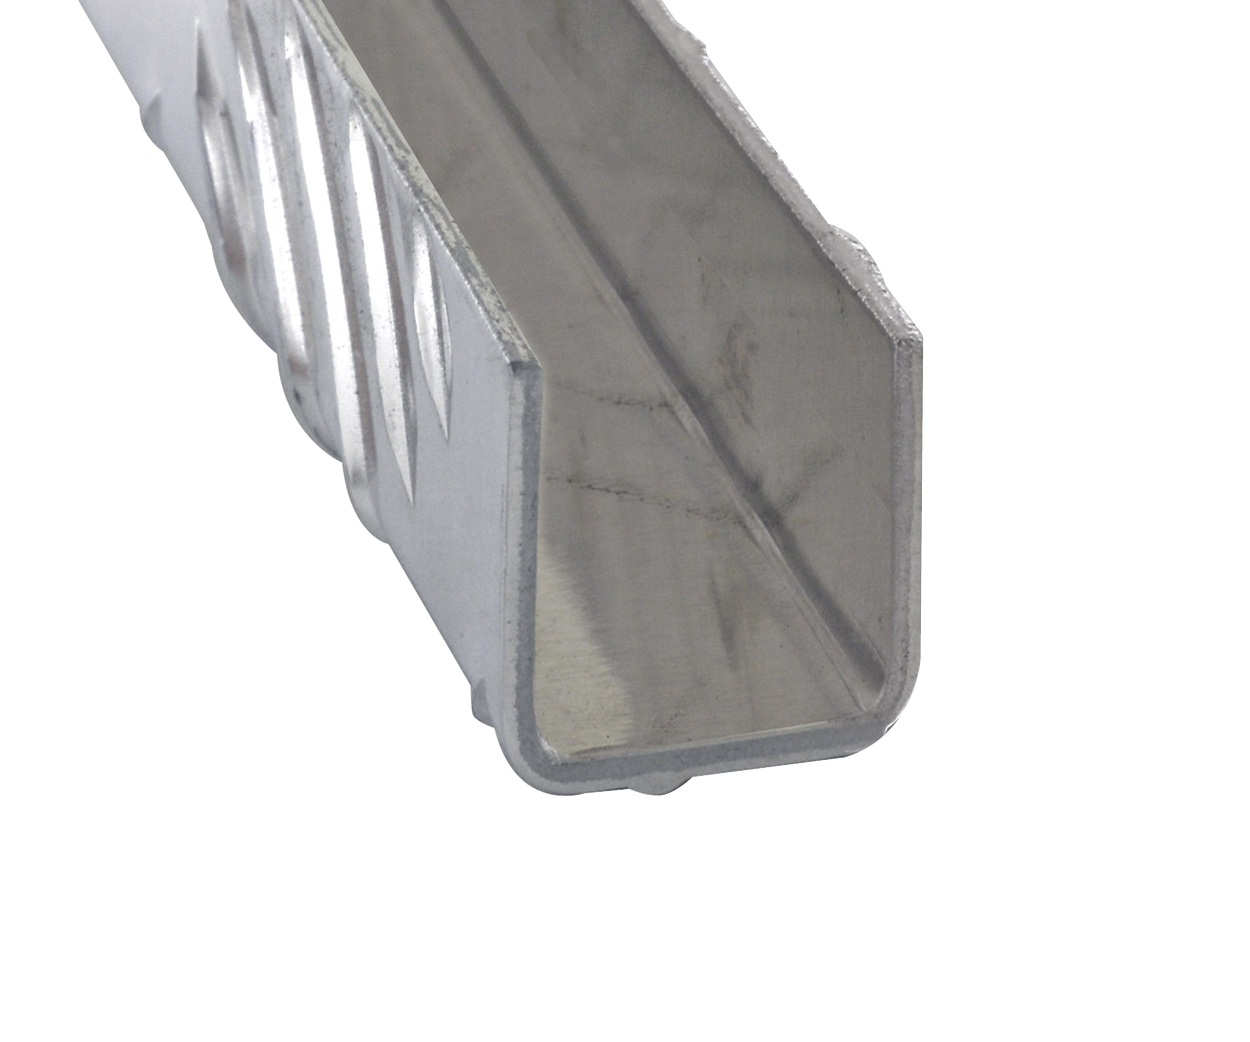 CQFD - Tôle aluminium perforée 1mm _500x250mm